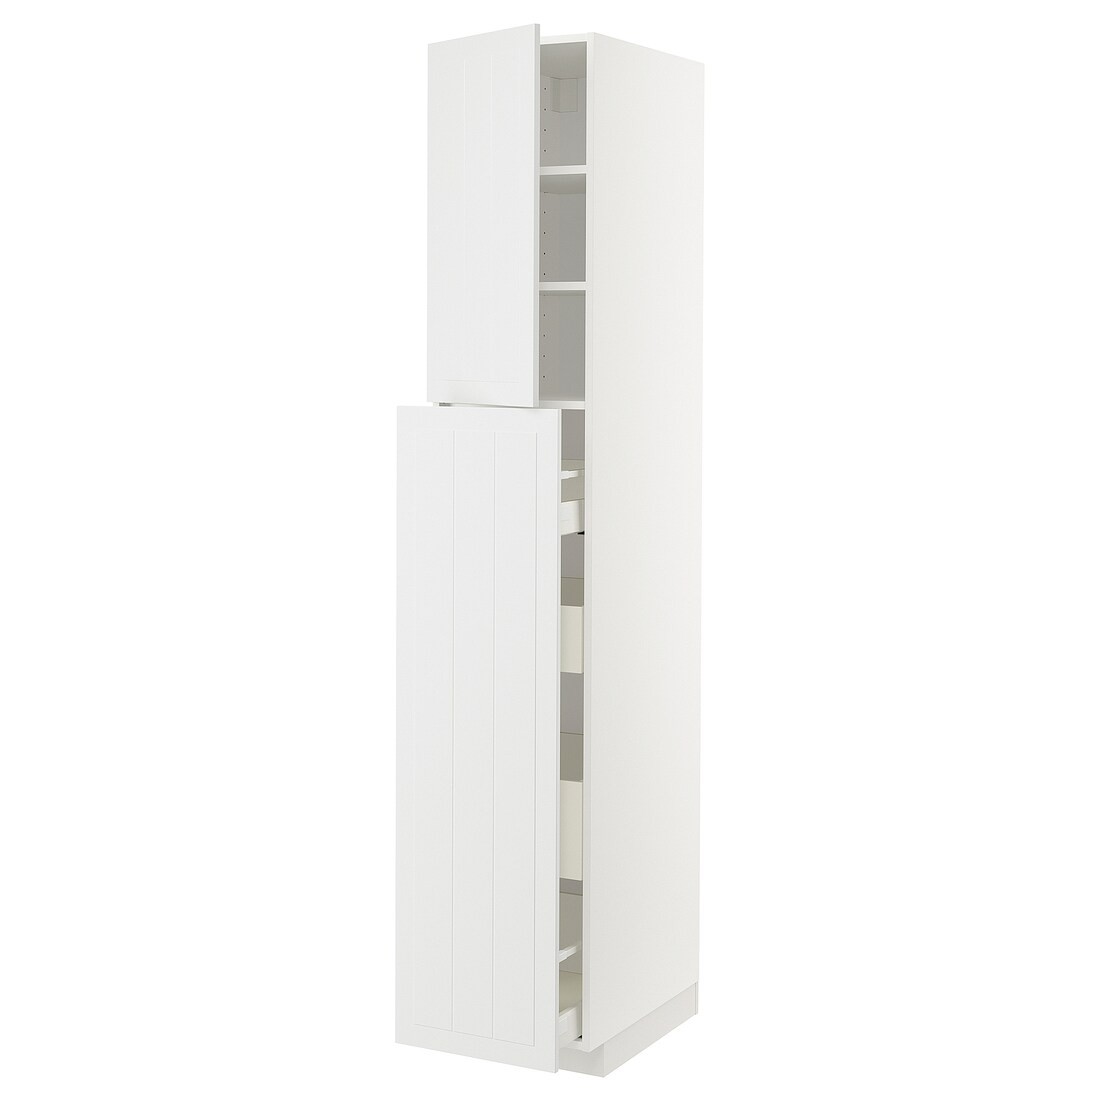 IKEA METOD МЕТОД / MAXIMERA МАКСИМЕРА Высокий шкаф полки / ящики, белый / Stensund белый, 40x60x220 см 49462990 | 494.629.90